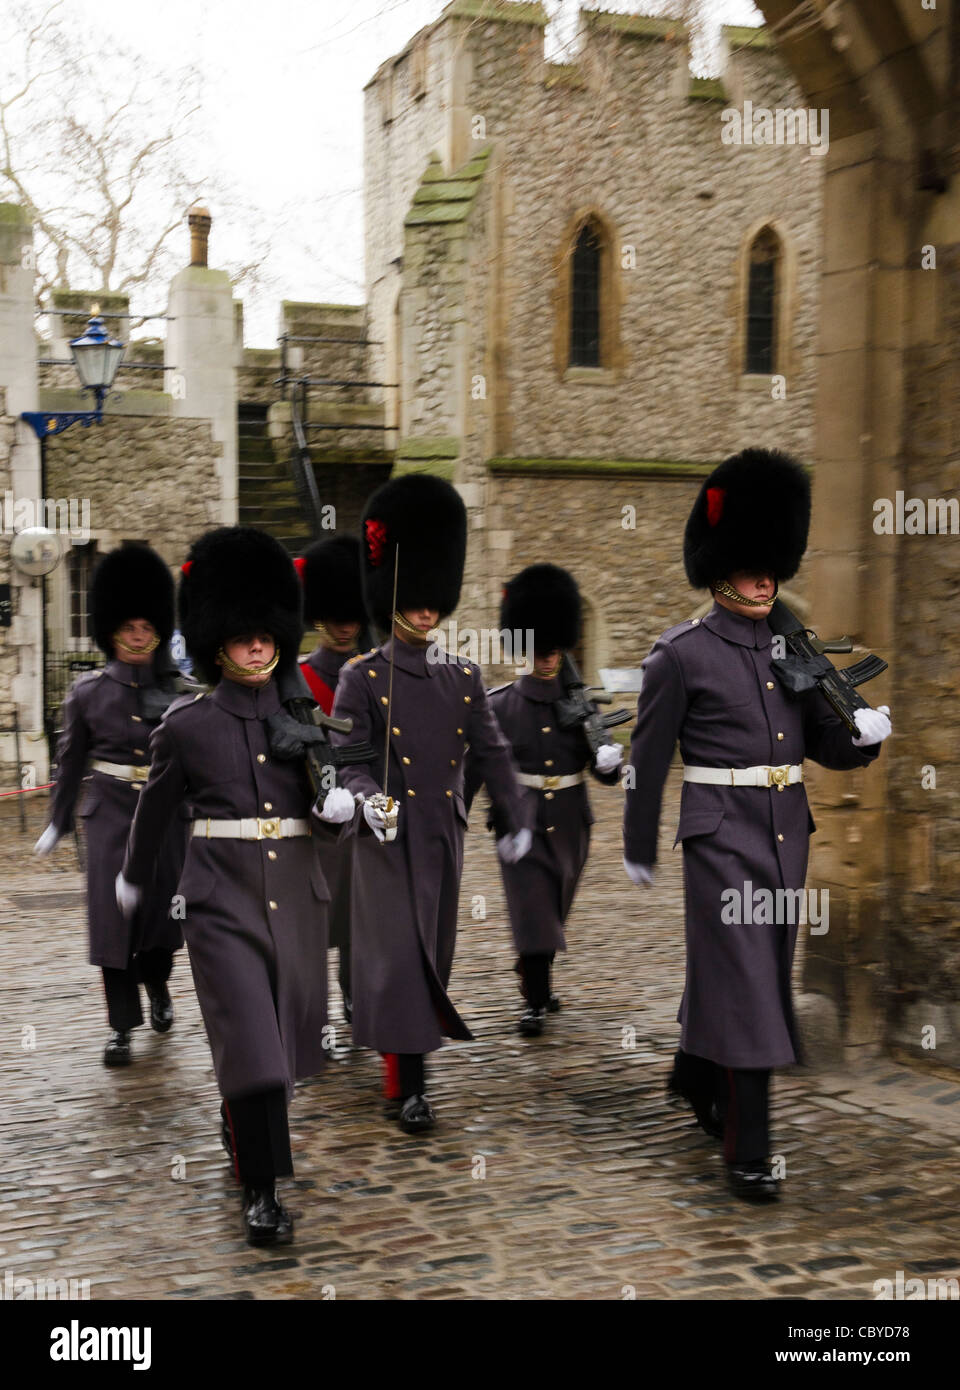 Marching garde royale Tour de Londres, Londres Angleterre Grande-bretagne UK Banque D'Images